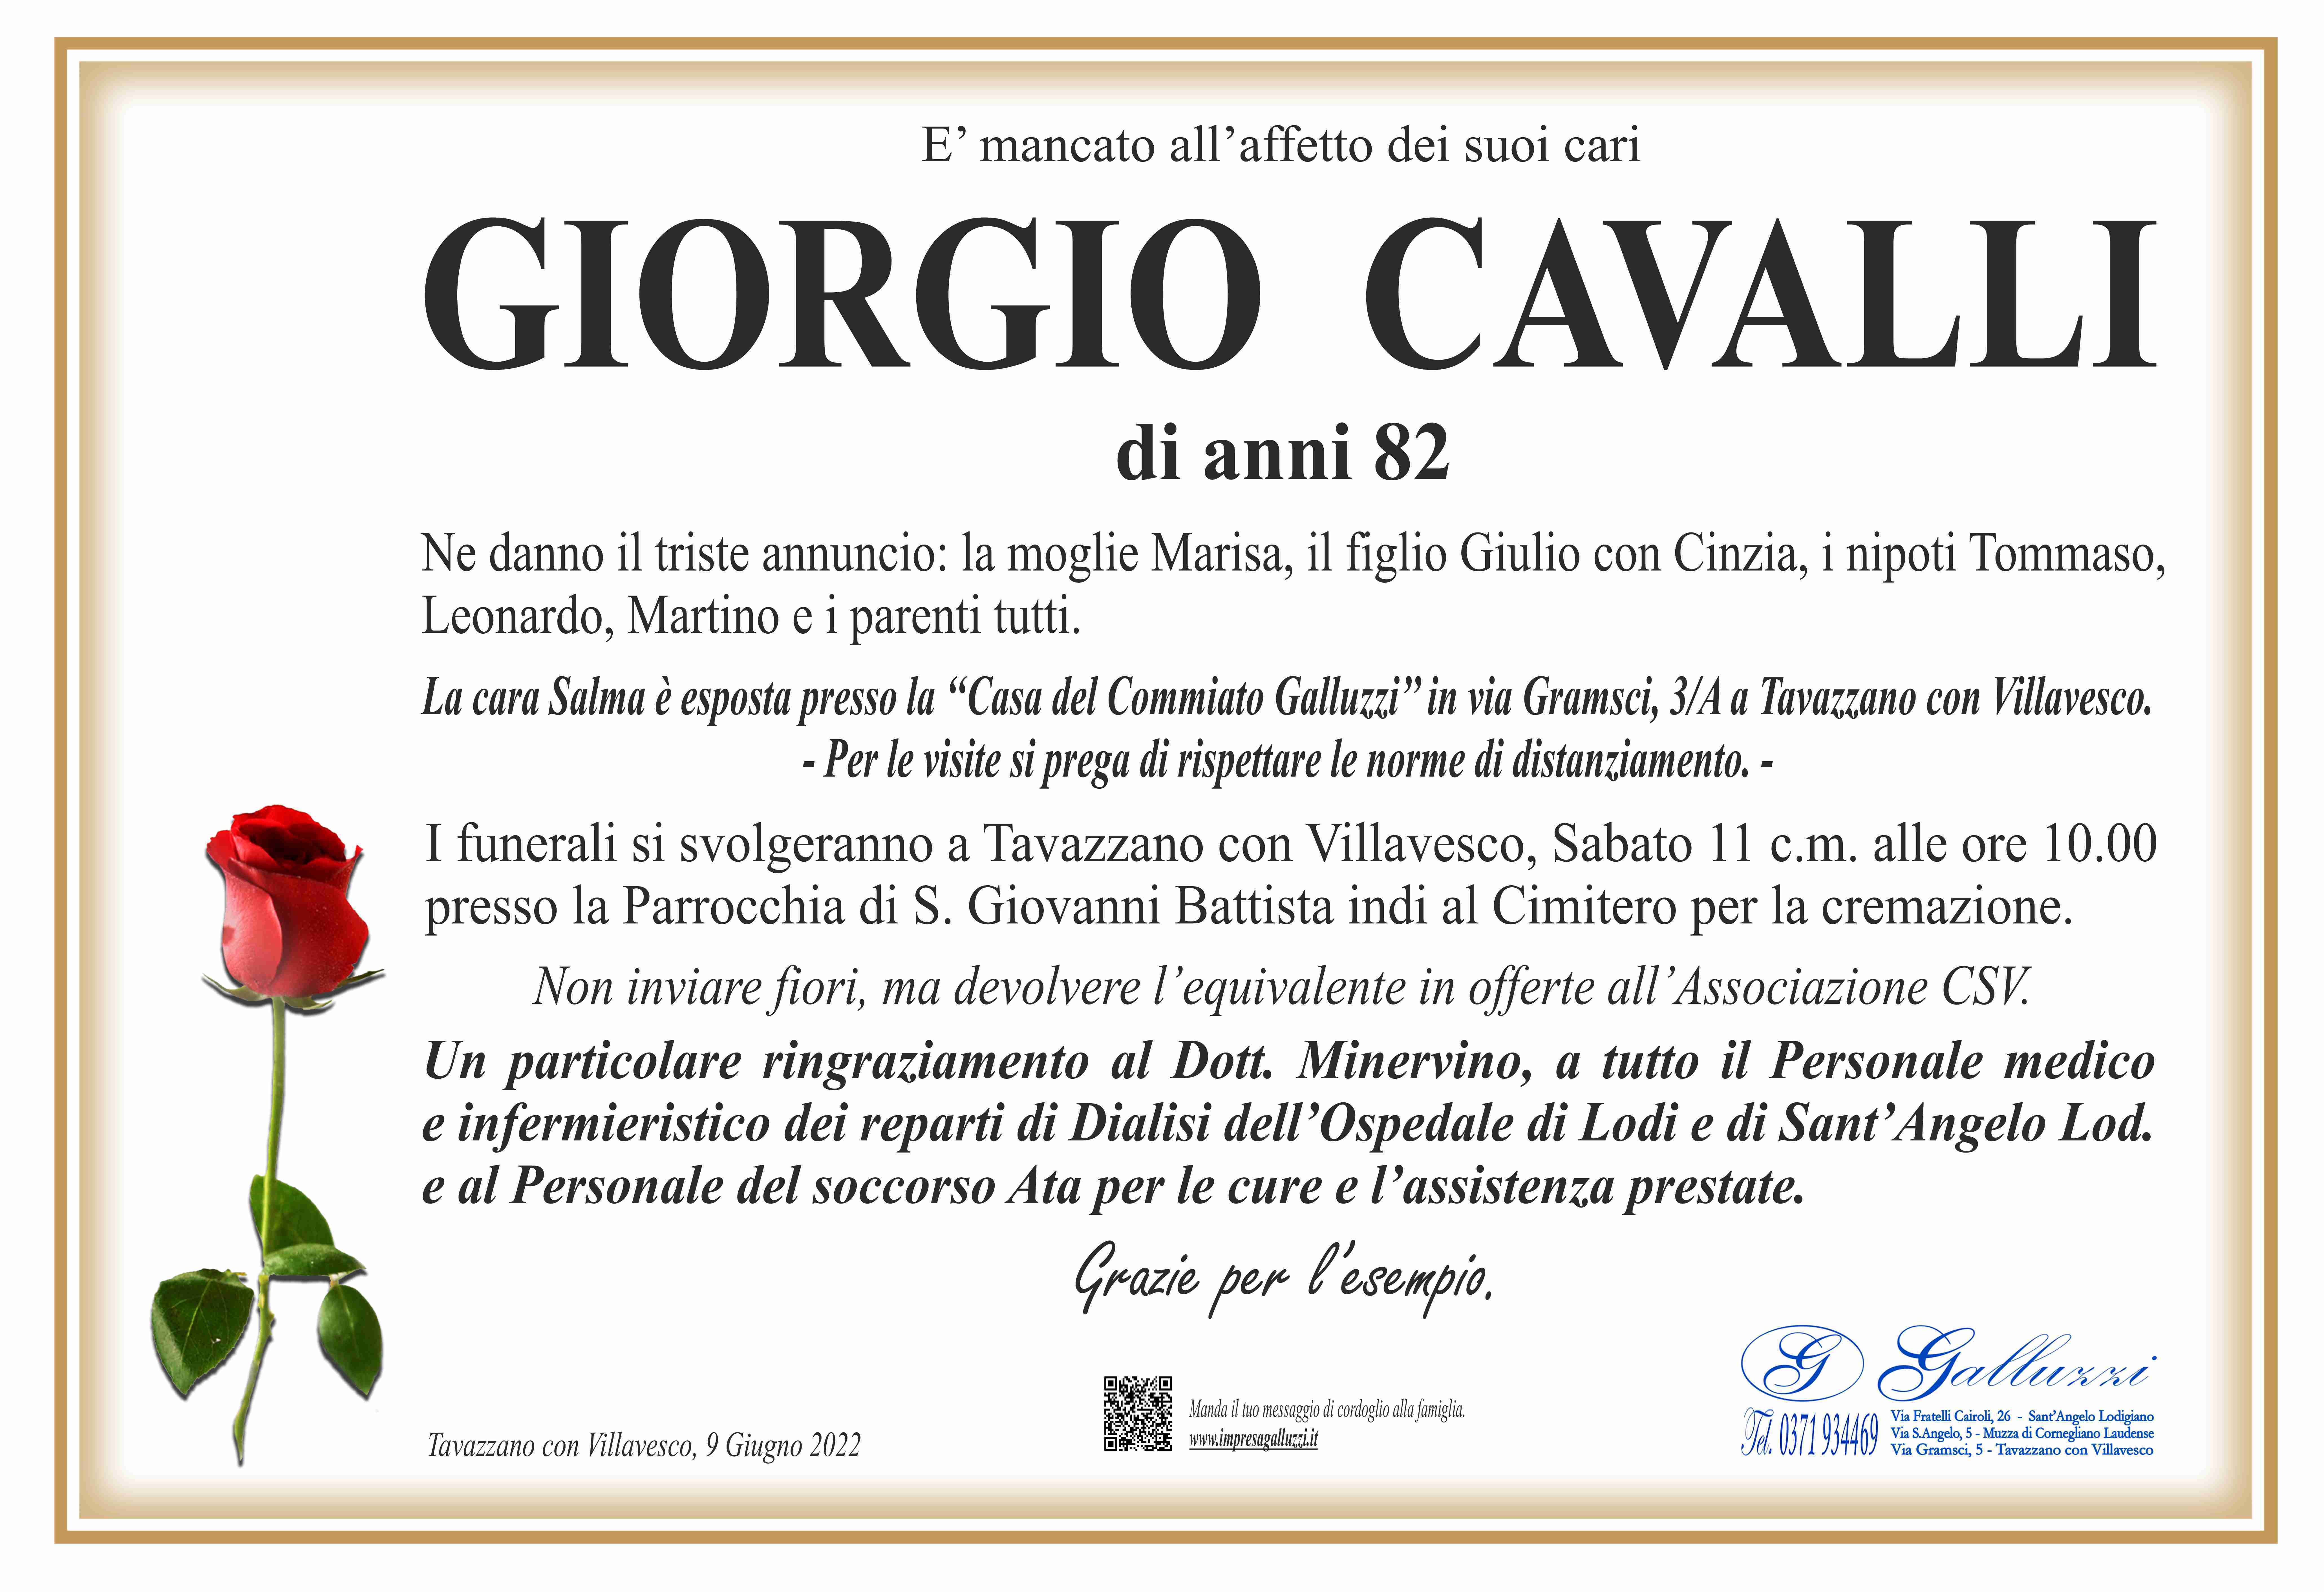 Giorgio Cavalli